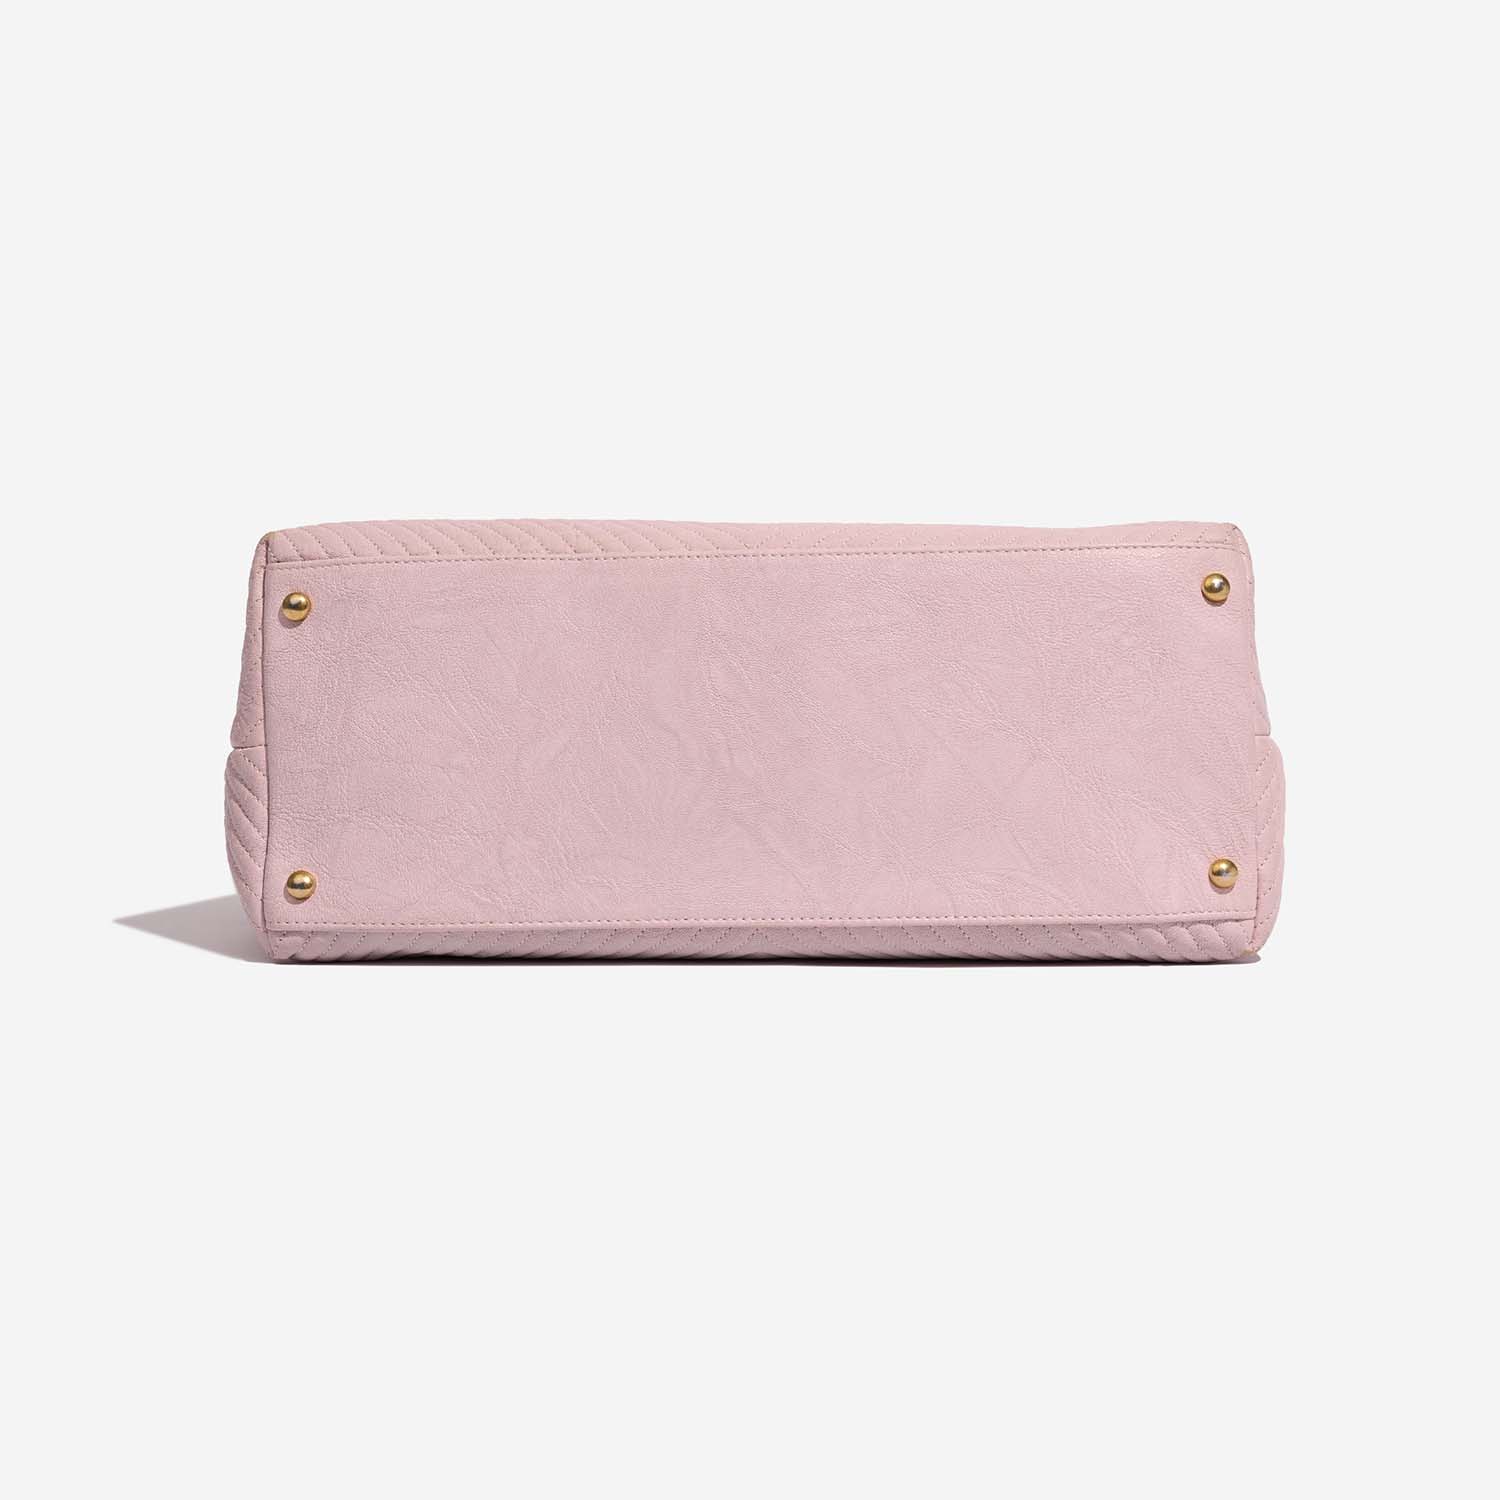 Chanel ShoppingTote Grand Rose 8BTM S | Sell your designer bag on Saclab.com